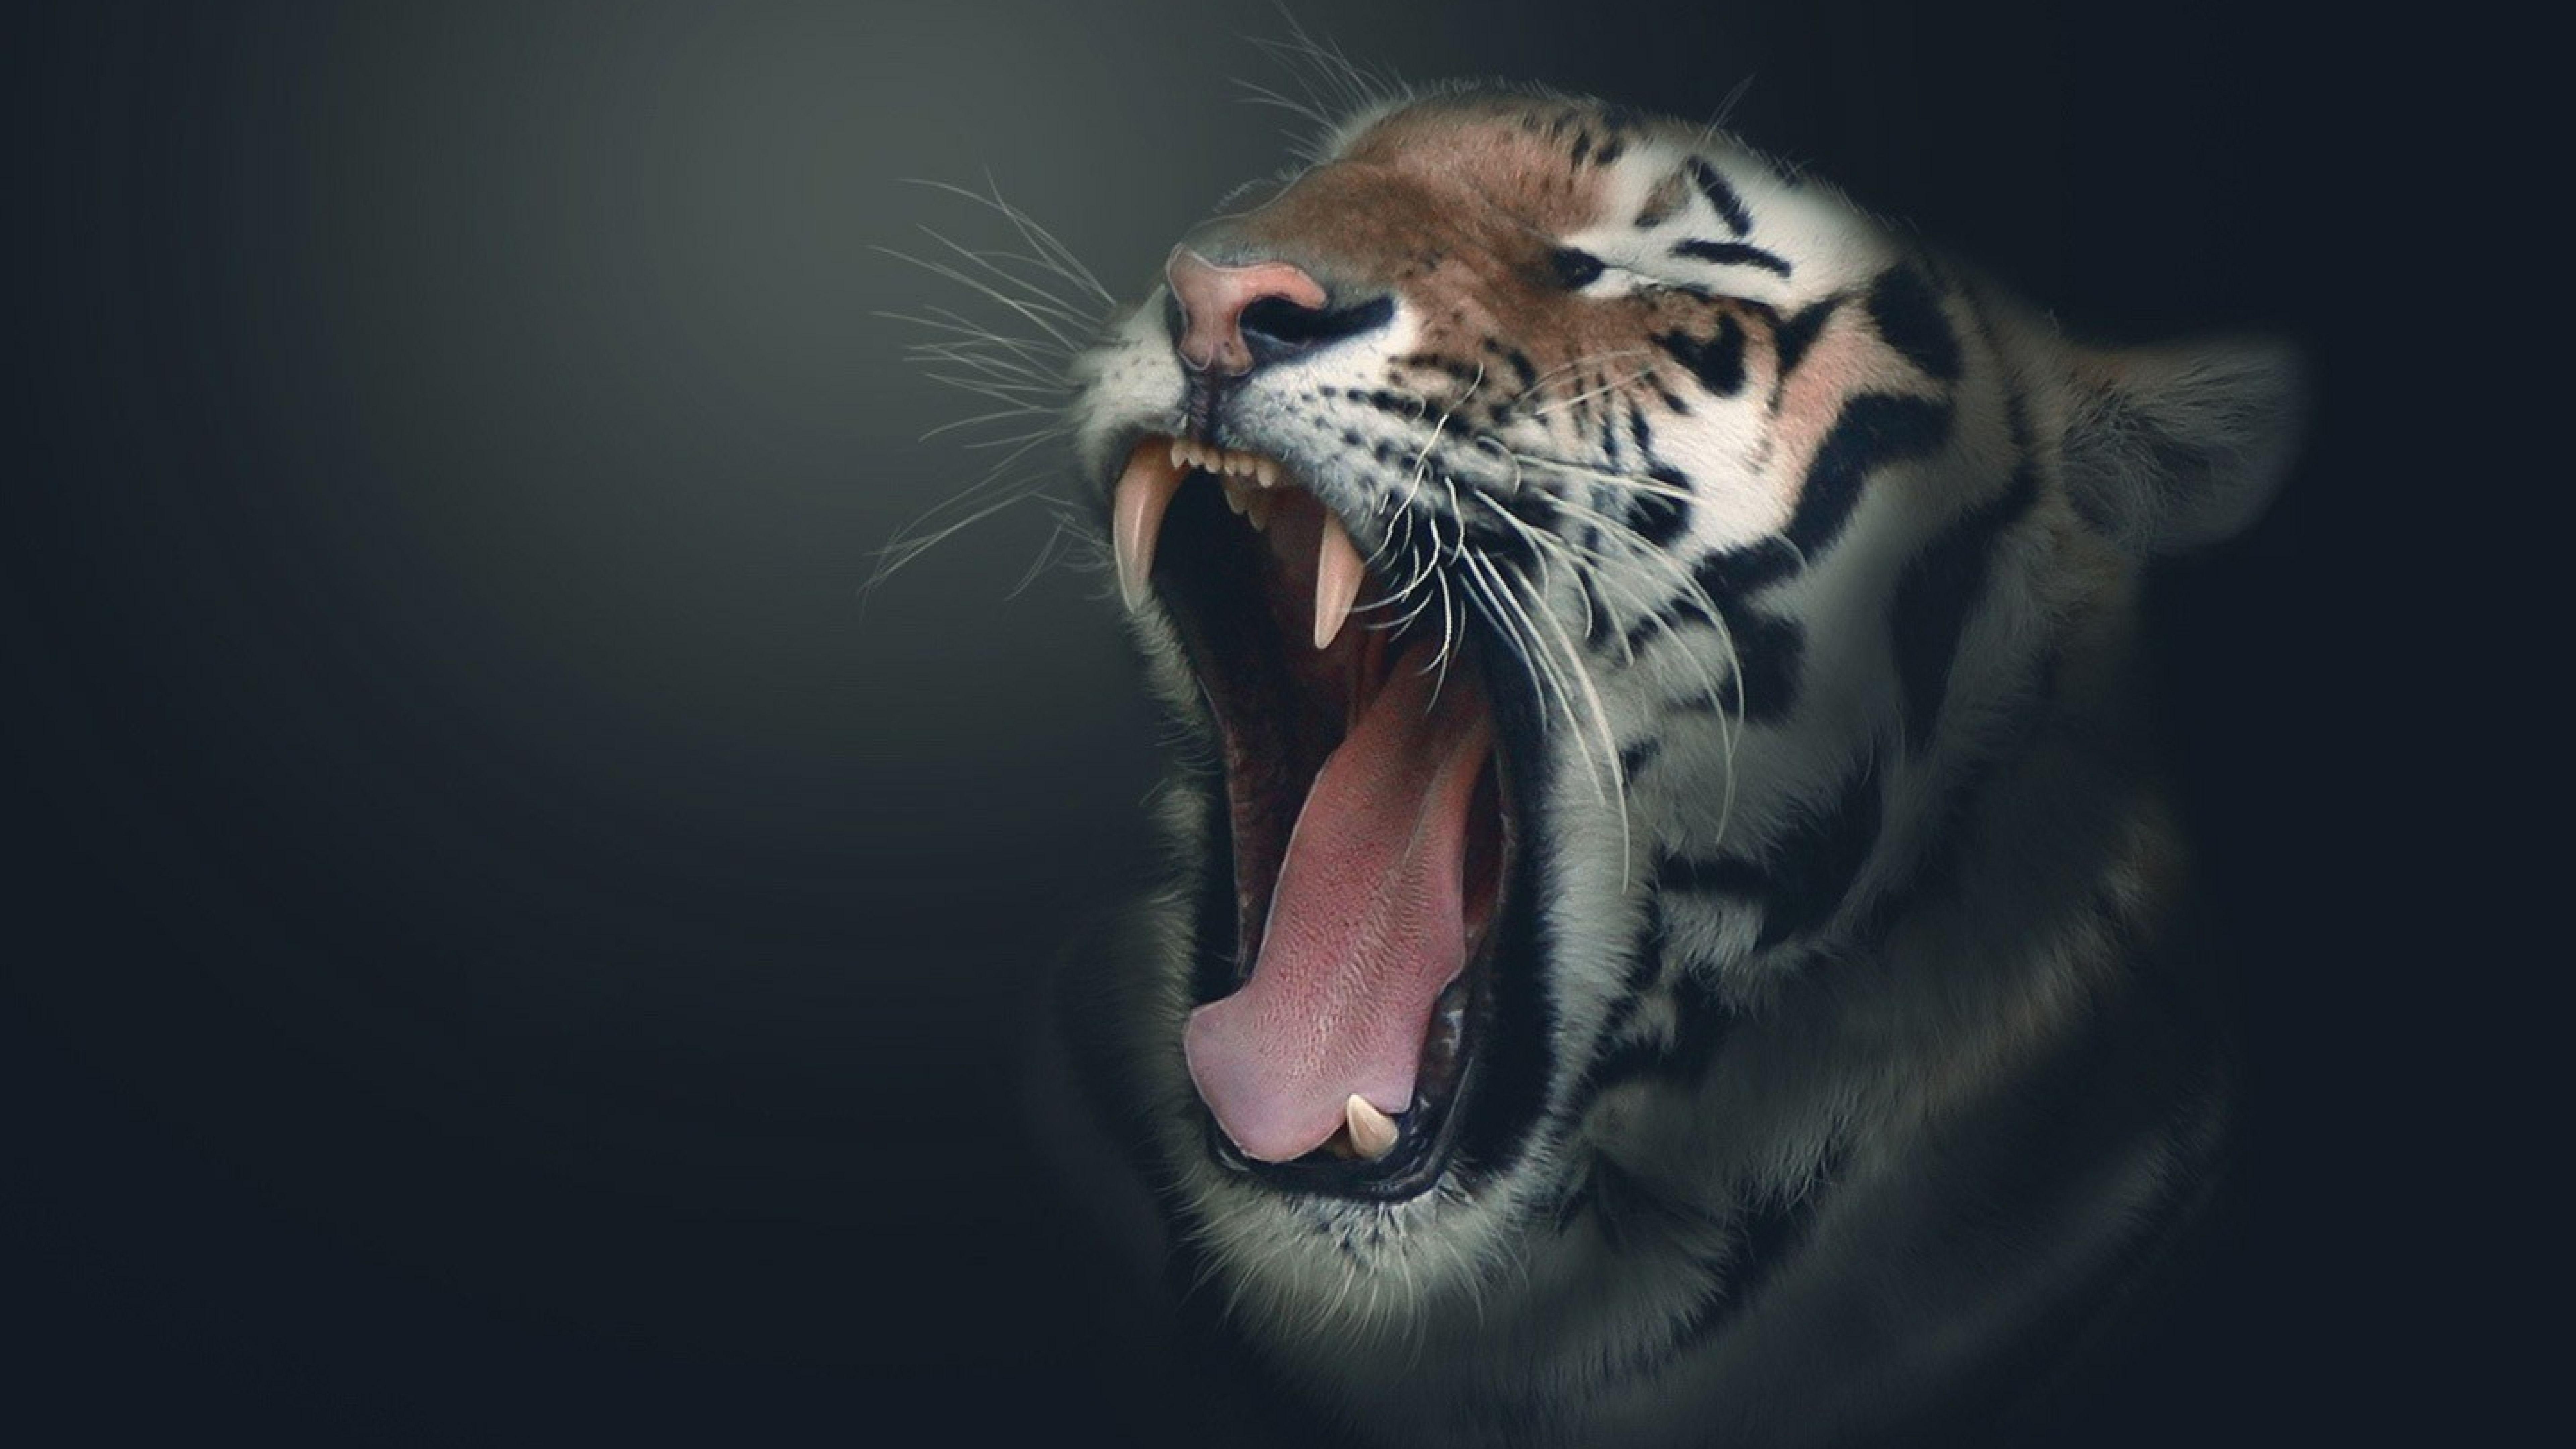 8K Tiger UHD Wallpapers - Top Free 8K Tiger UHD ...